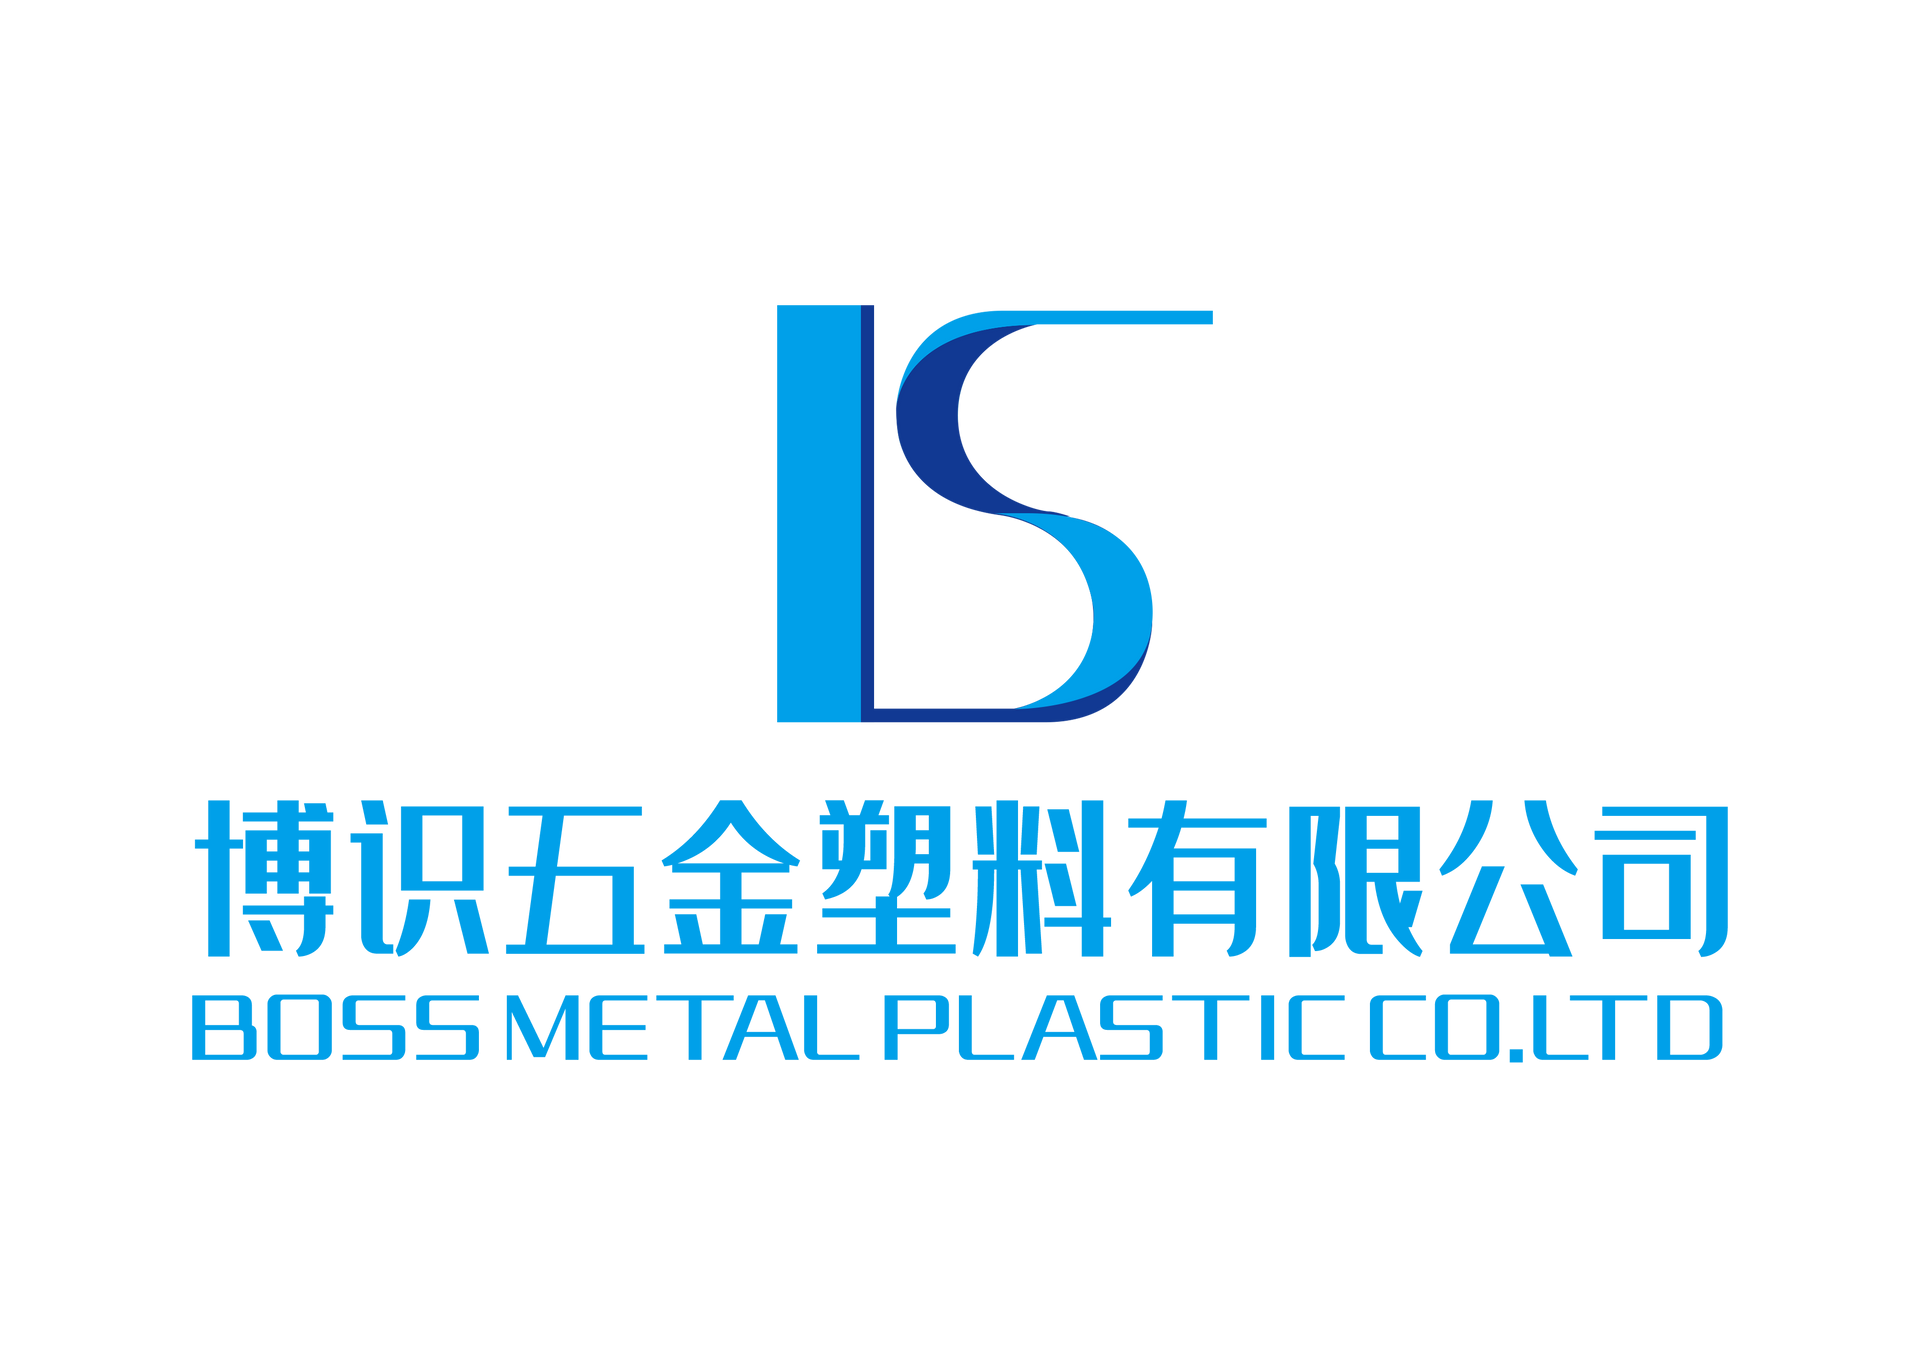 BOSS METAL AND PLASTIC CO.LTD logo